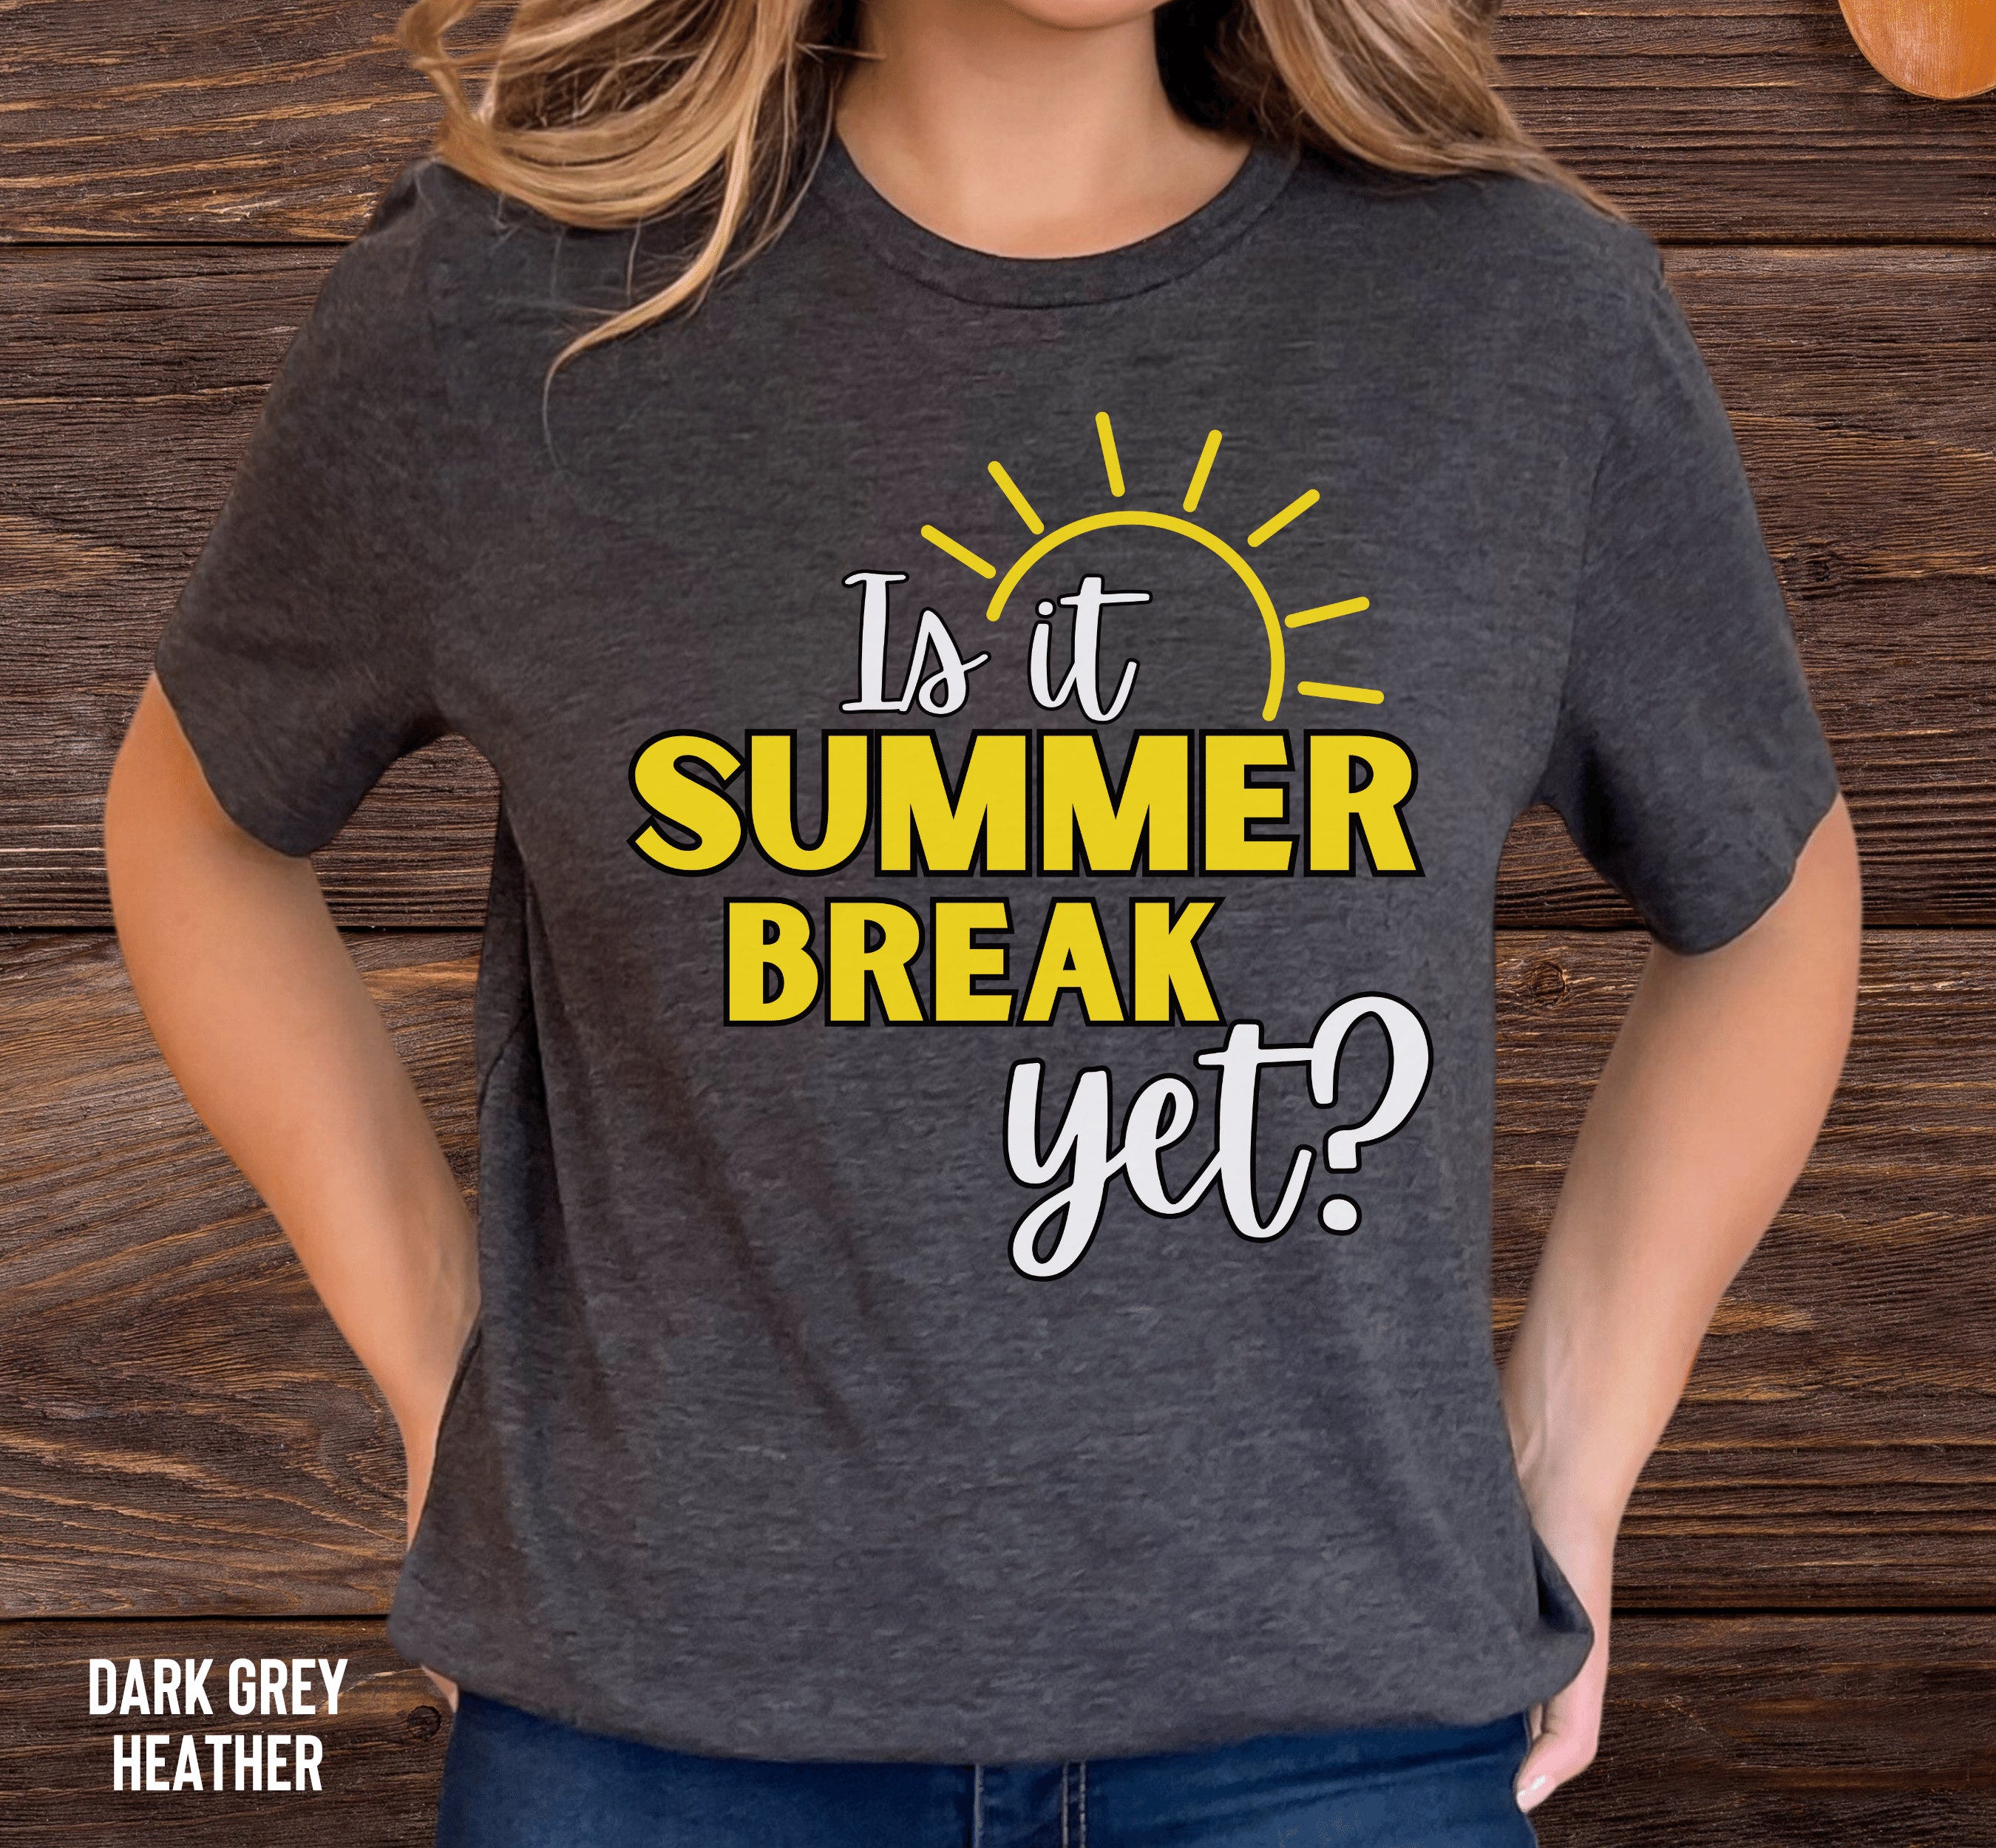 Is It Summer Break Yet Shirt, Funny Last Day of School TShirt, End of Year Teacher Tee, Summer Break TShirt, Teacher Gift, Teacher Vacation